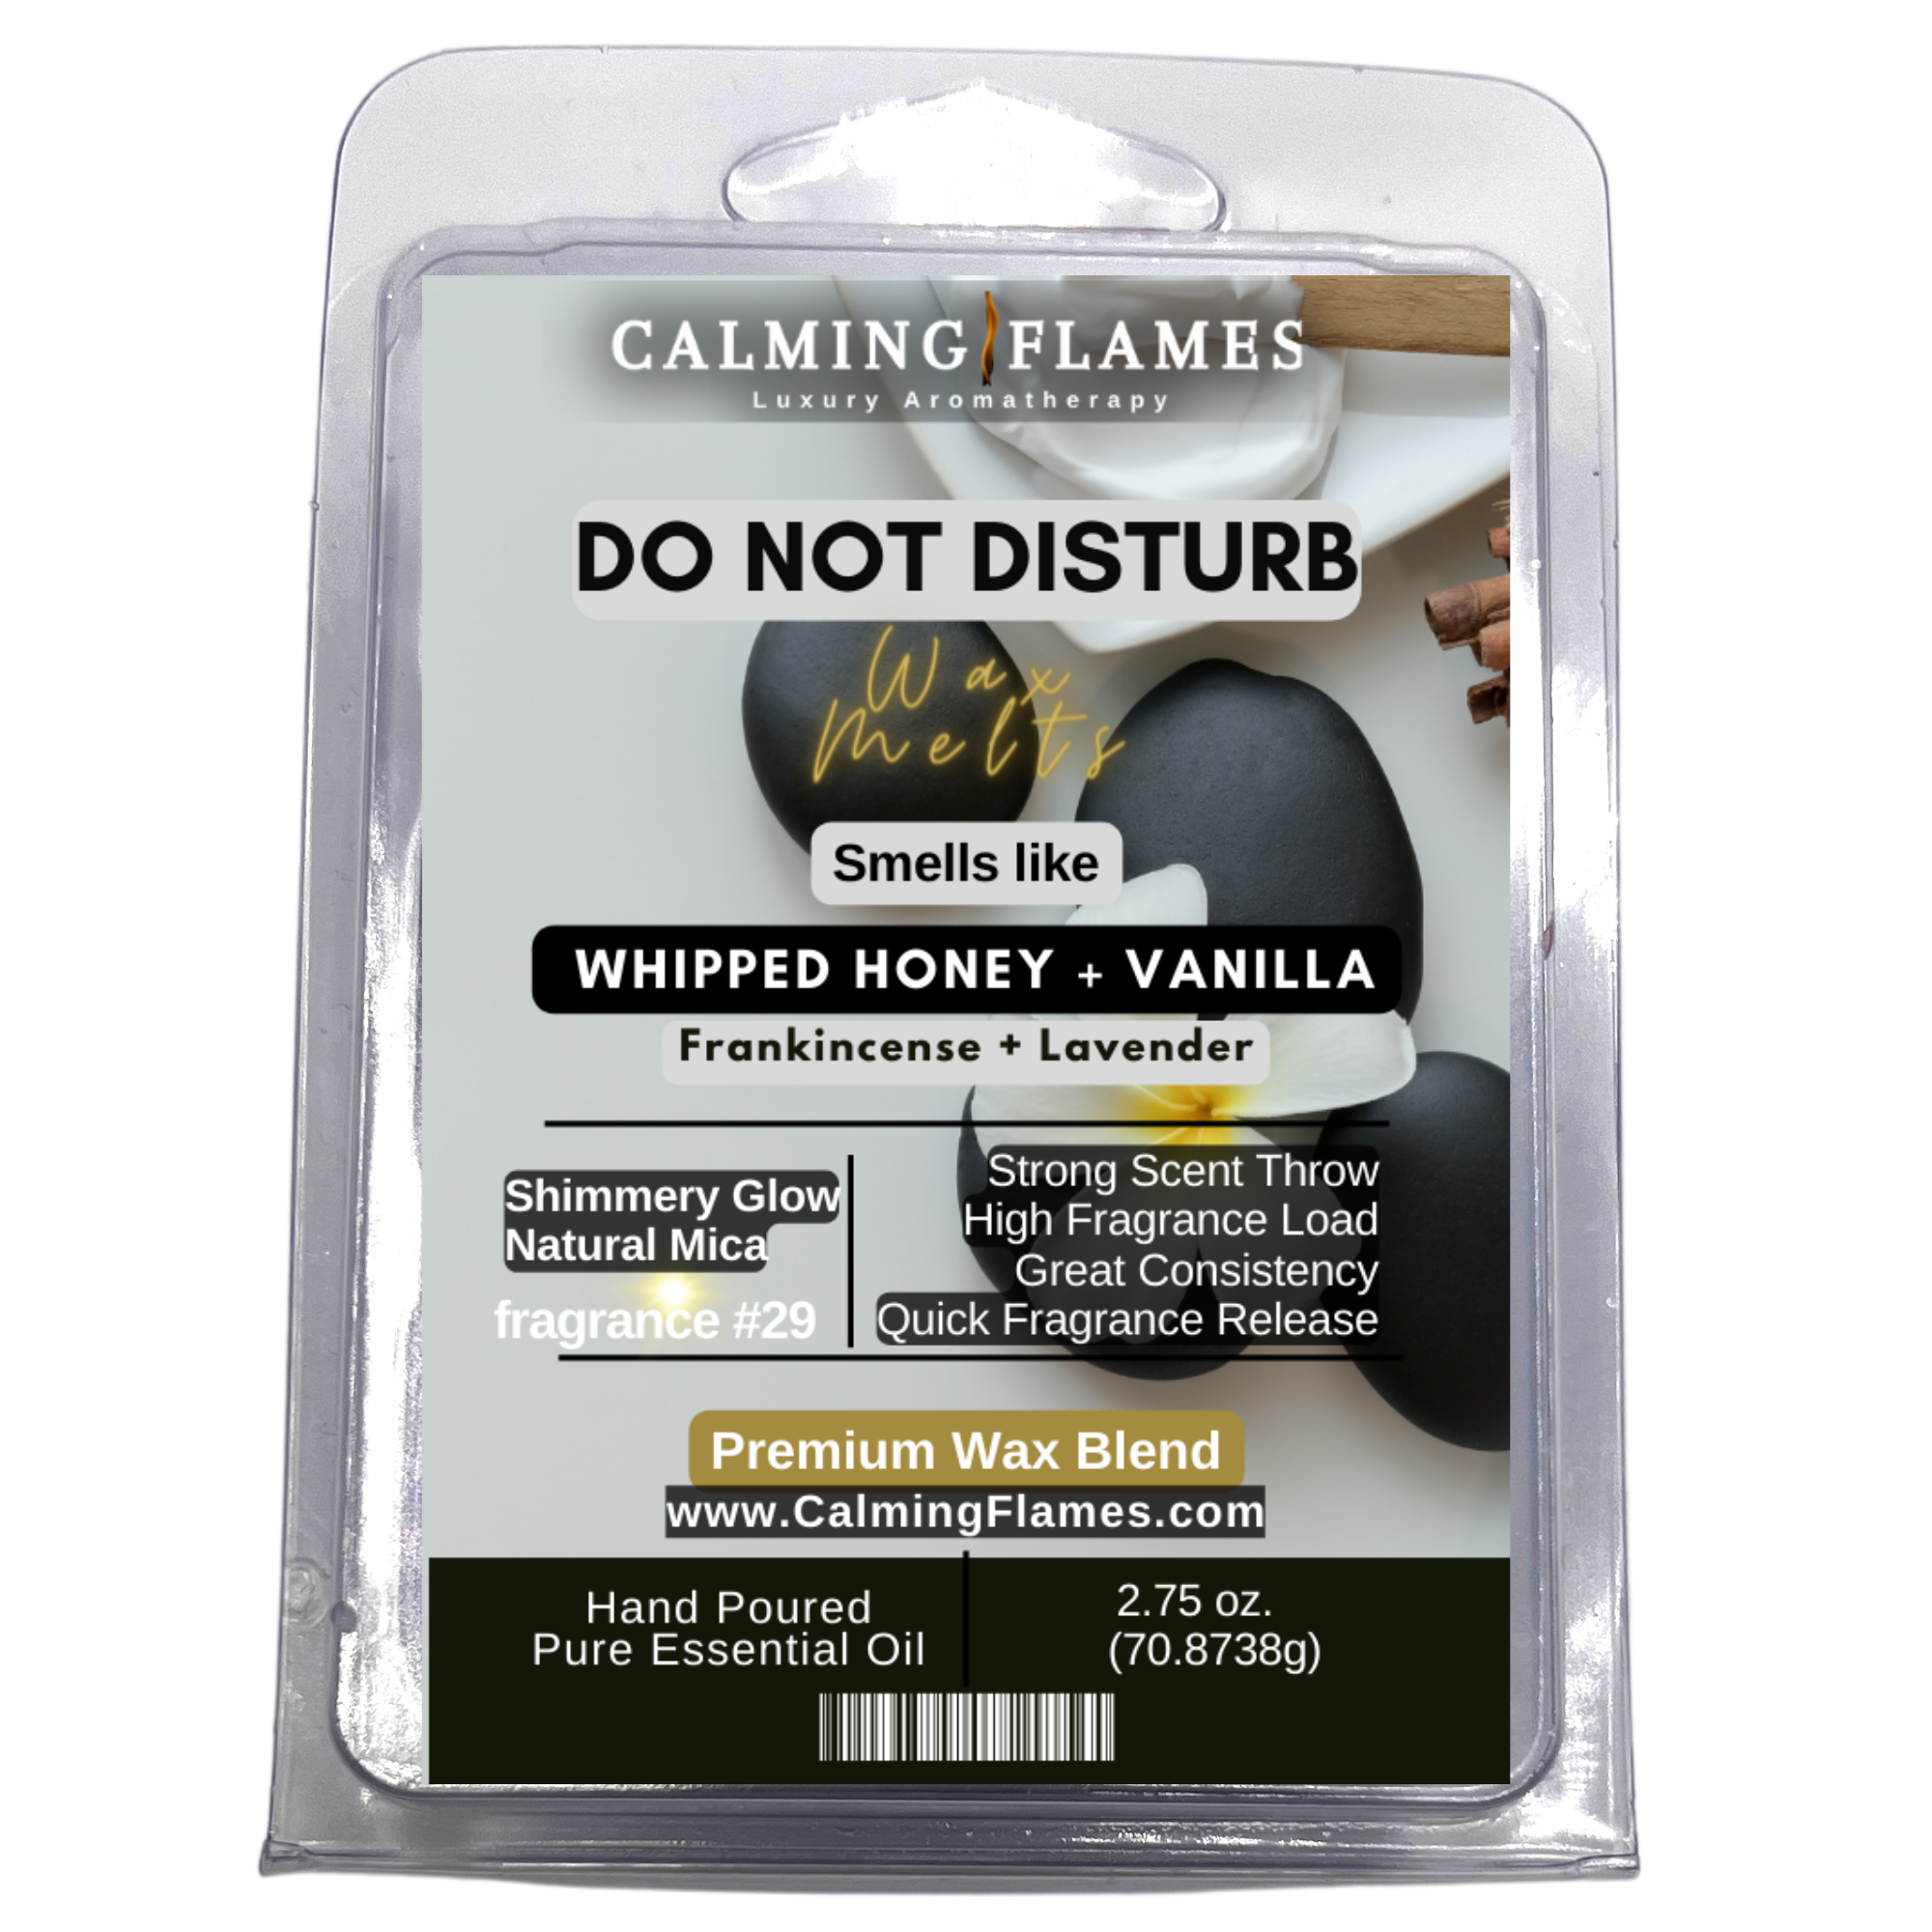 Whipped Honey + Vanilla Scent, DO NOT DISTURB WAX MELTS